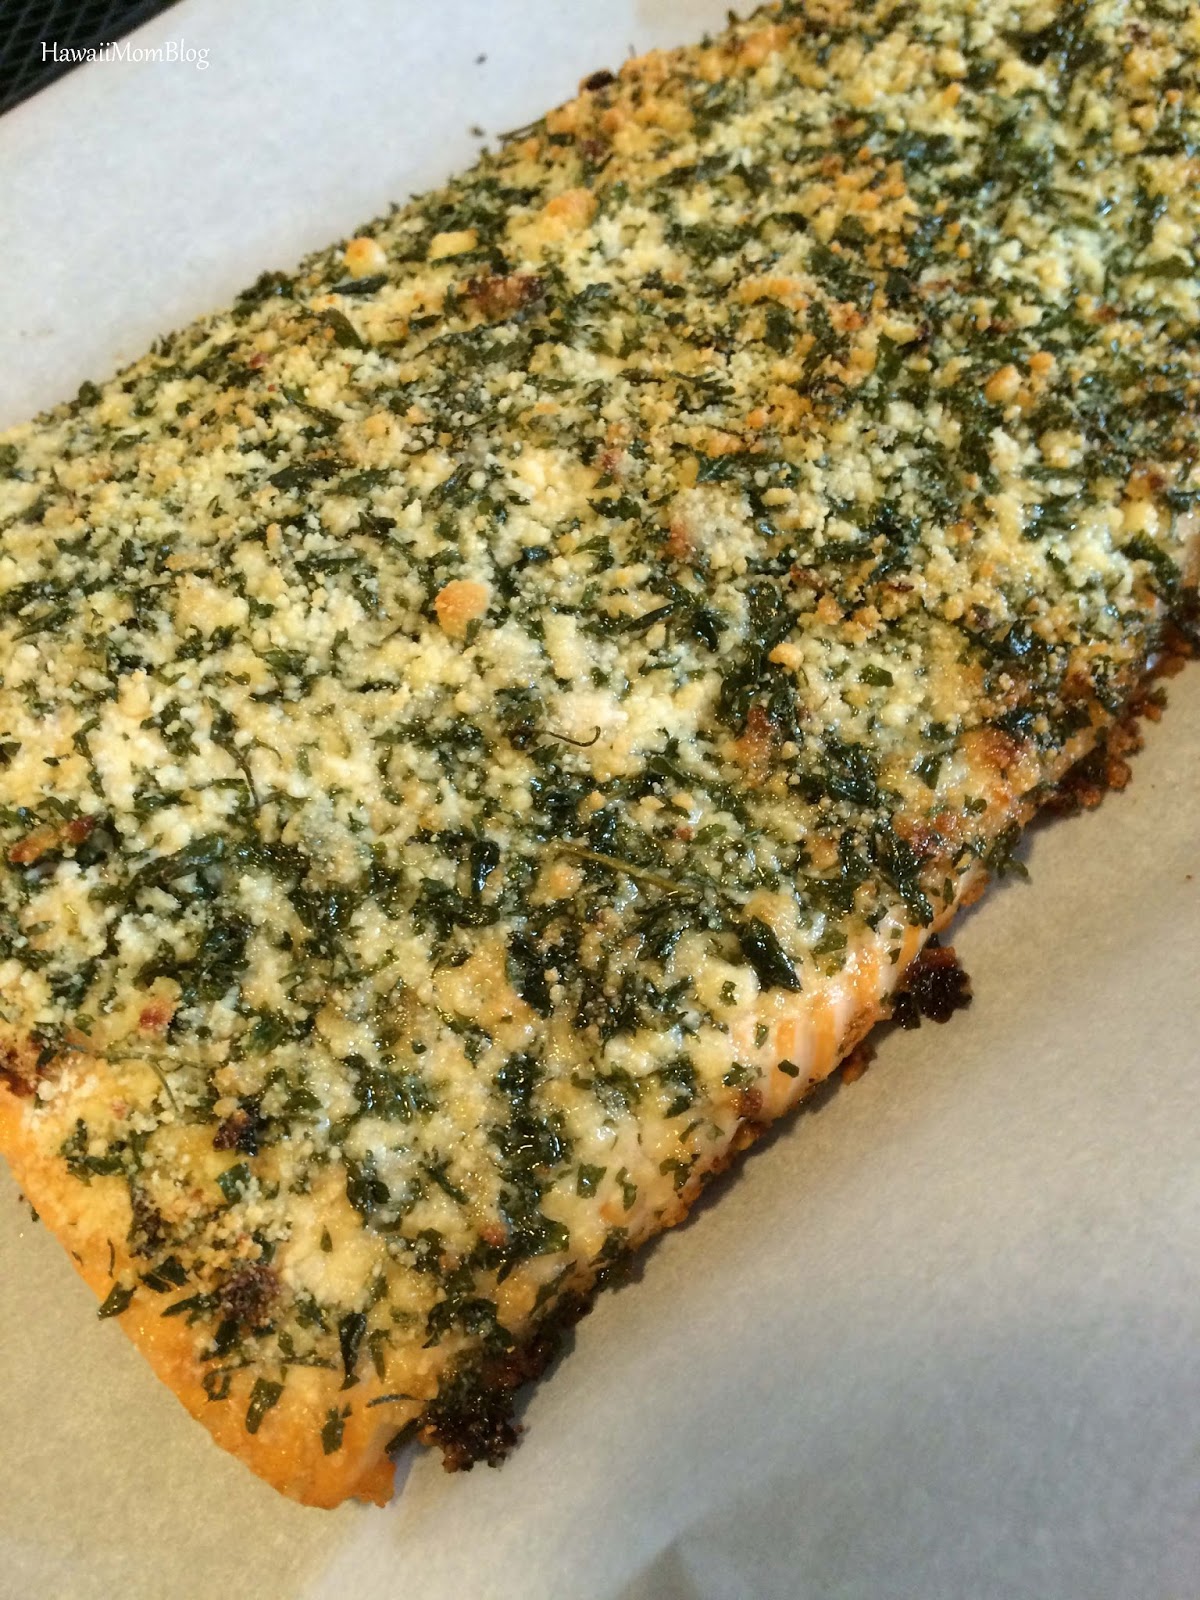 Hawaii Mom Blog: Parmesan Herb-Crusted Salmon Recipe